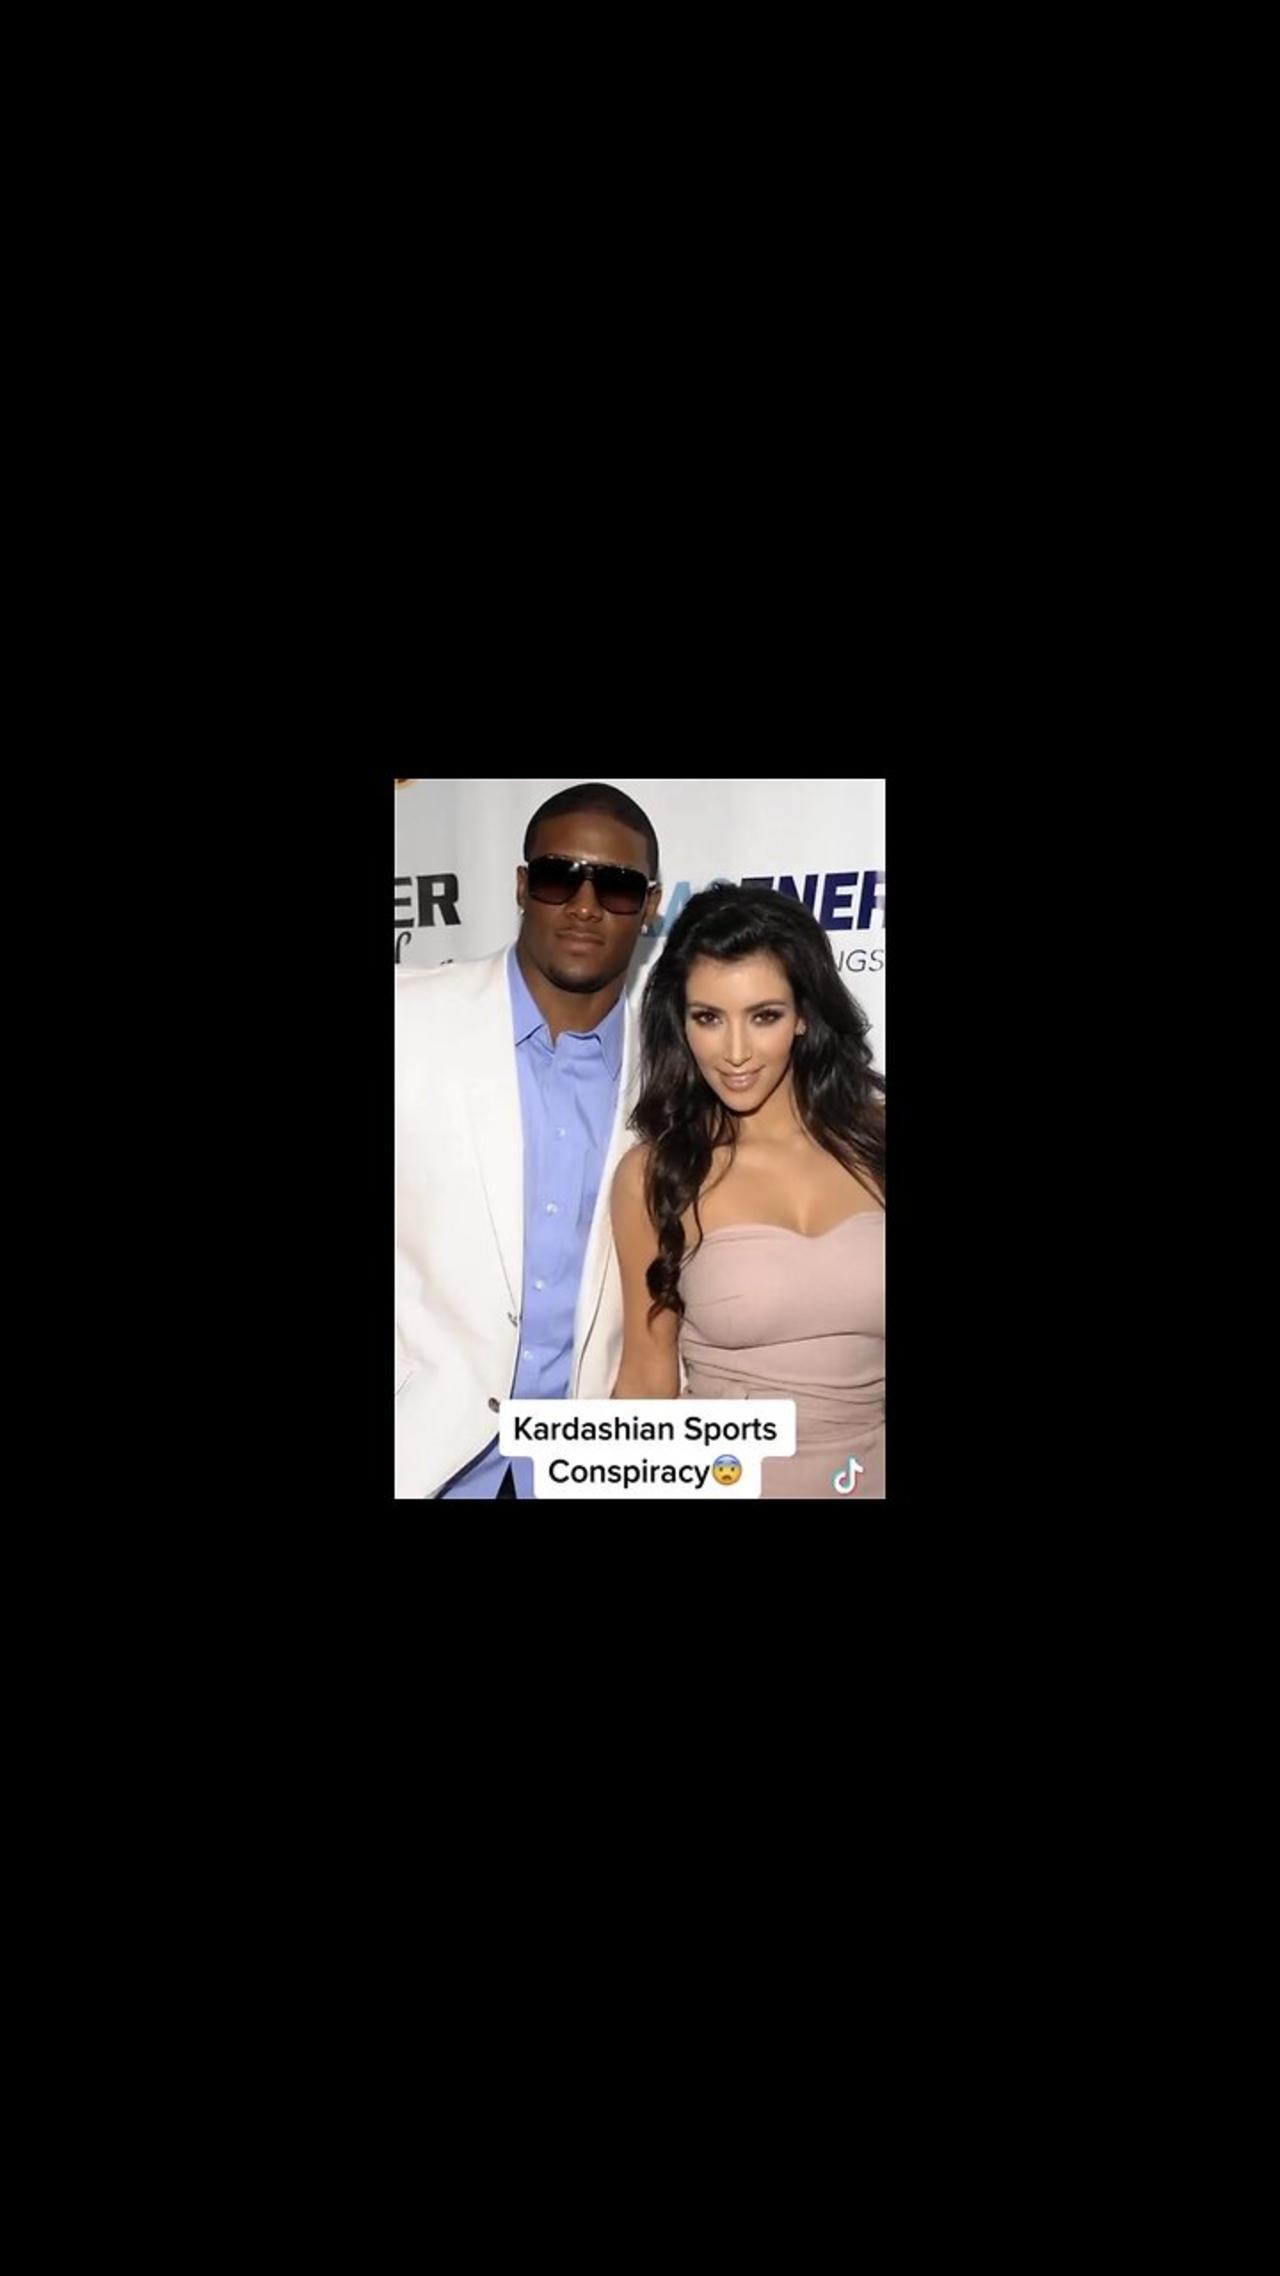 Kardashian Kurse [A Kardashian Sports Conspiracy — Too Many Coincidences]